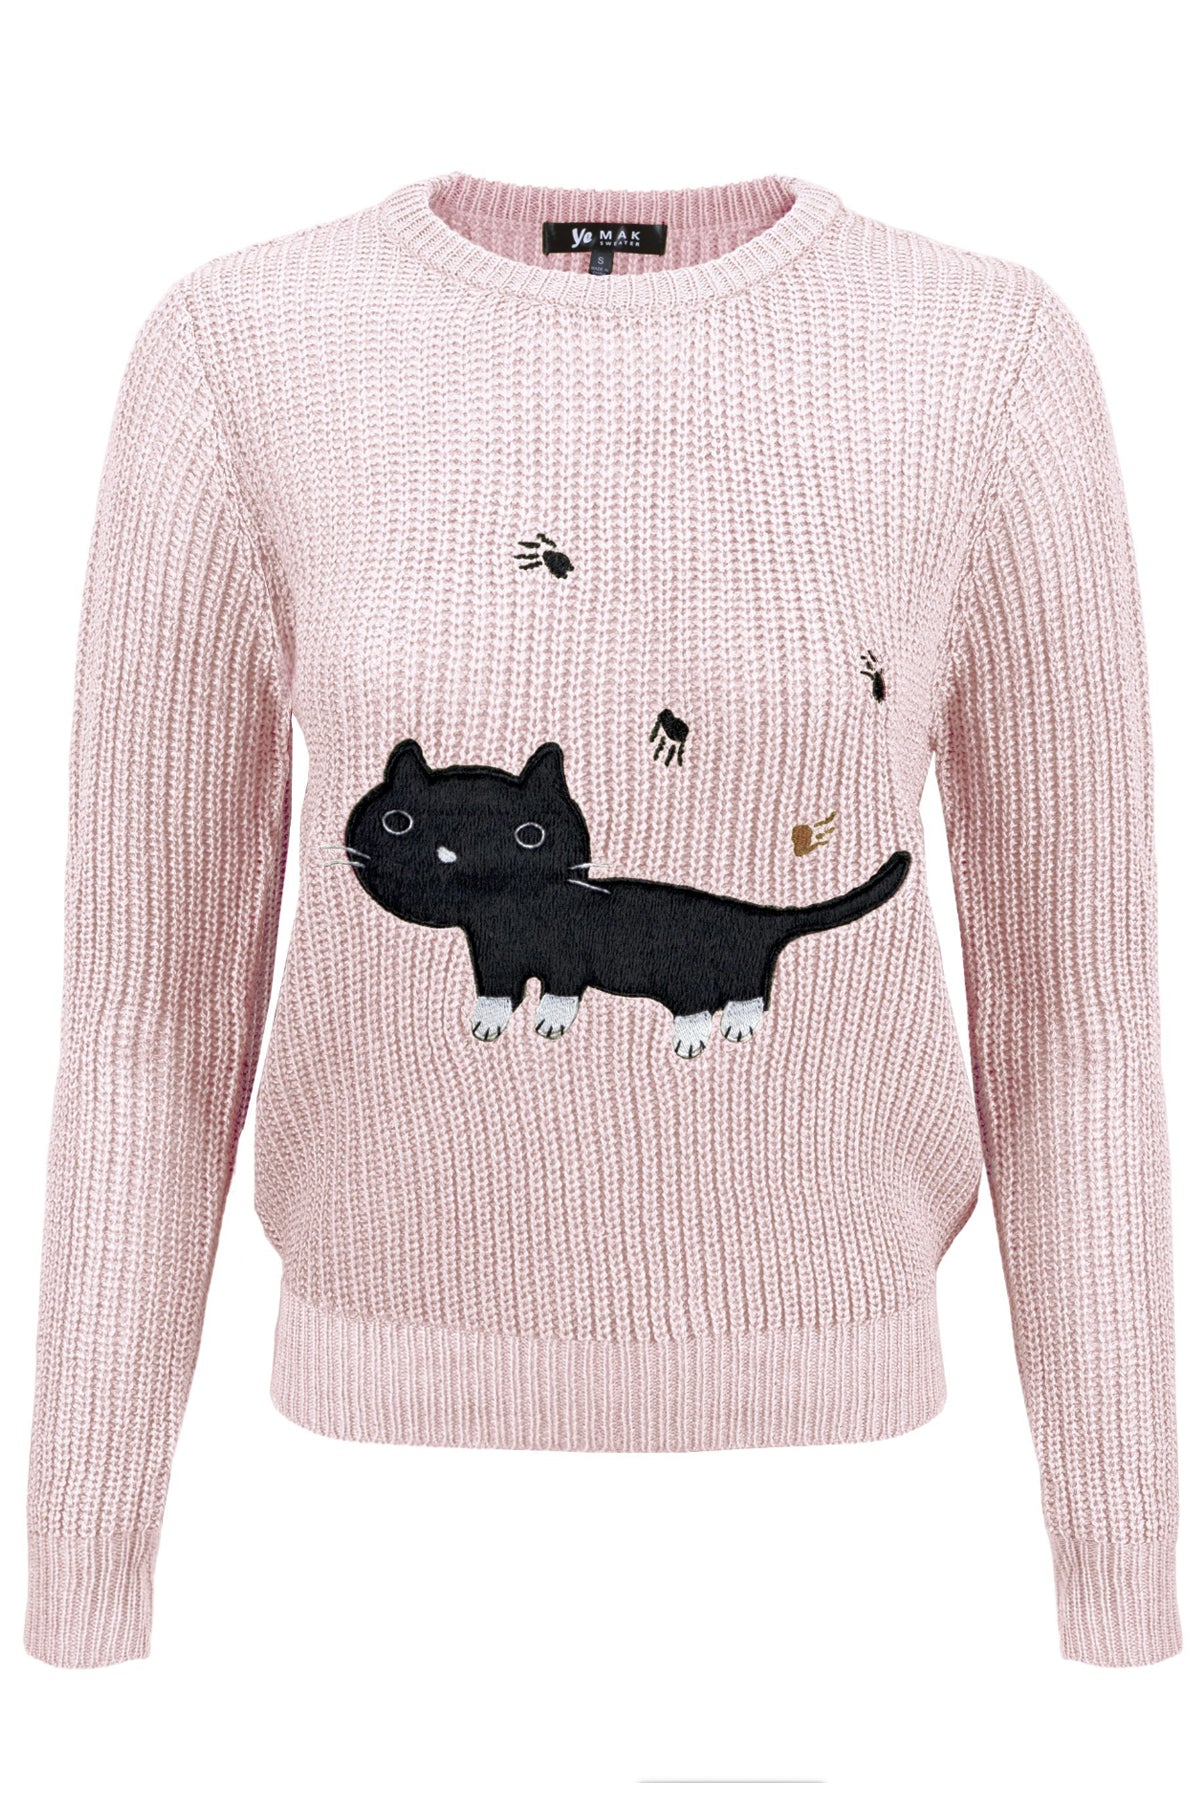 Black Cat Applique Crewneck Long Sleeve Pullover Casual Knit Sweater Pink - shopjessicalouise.com